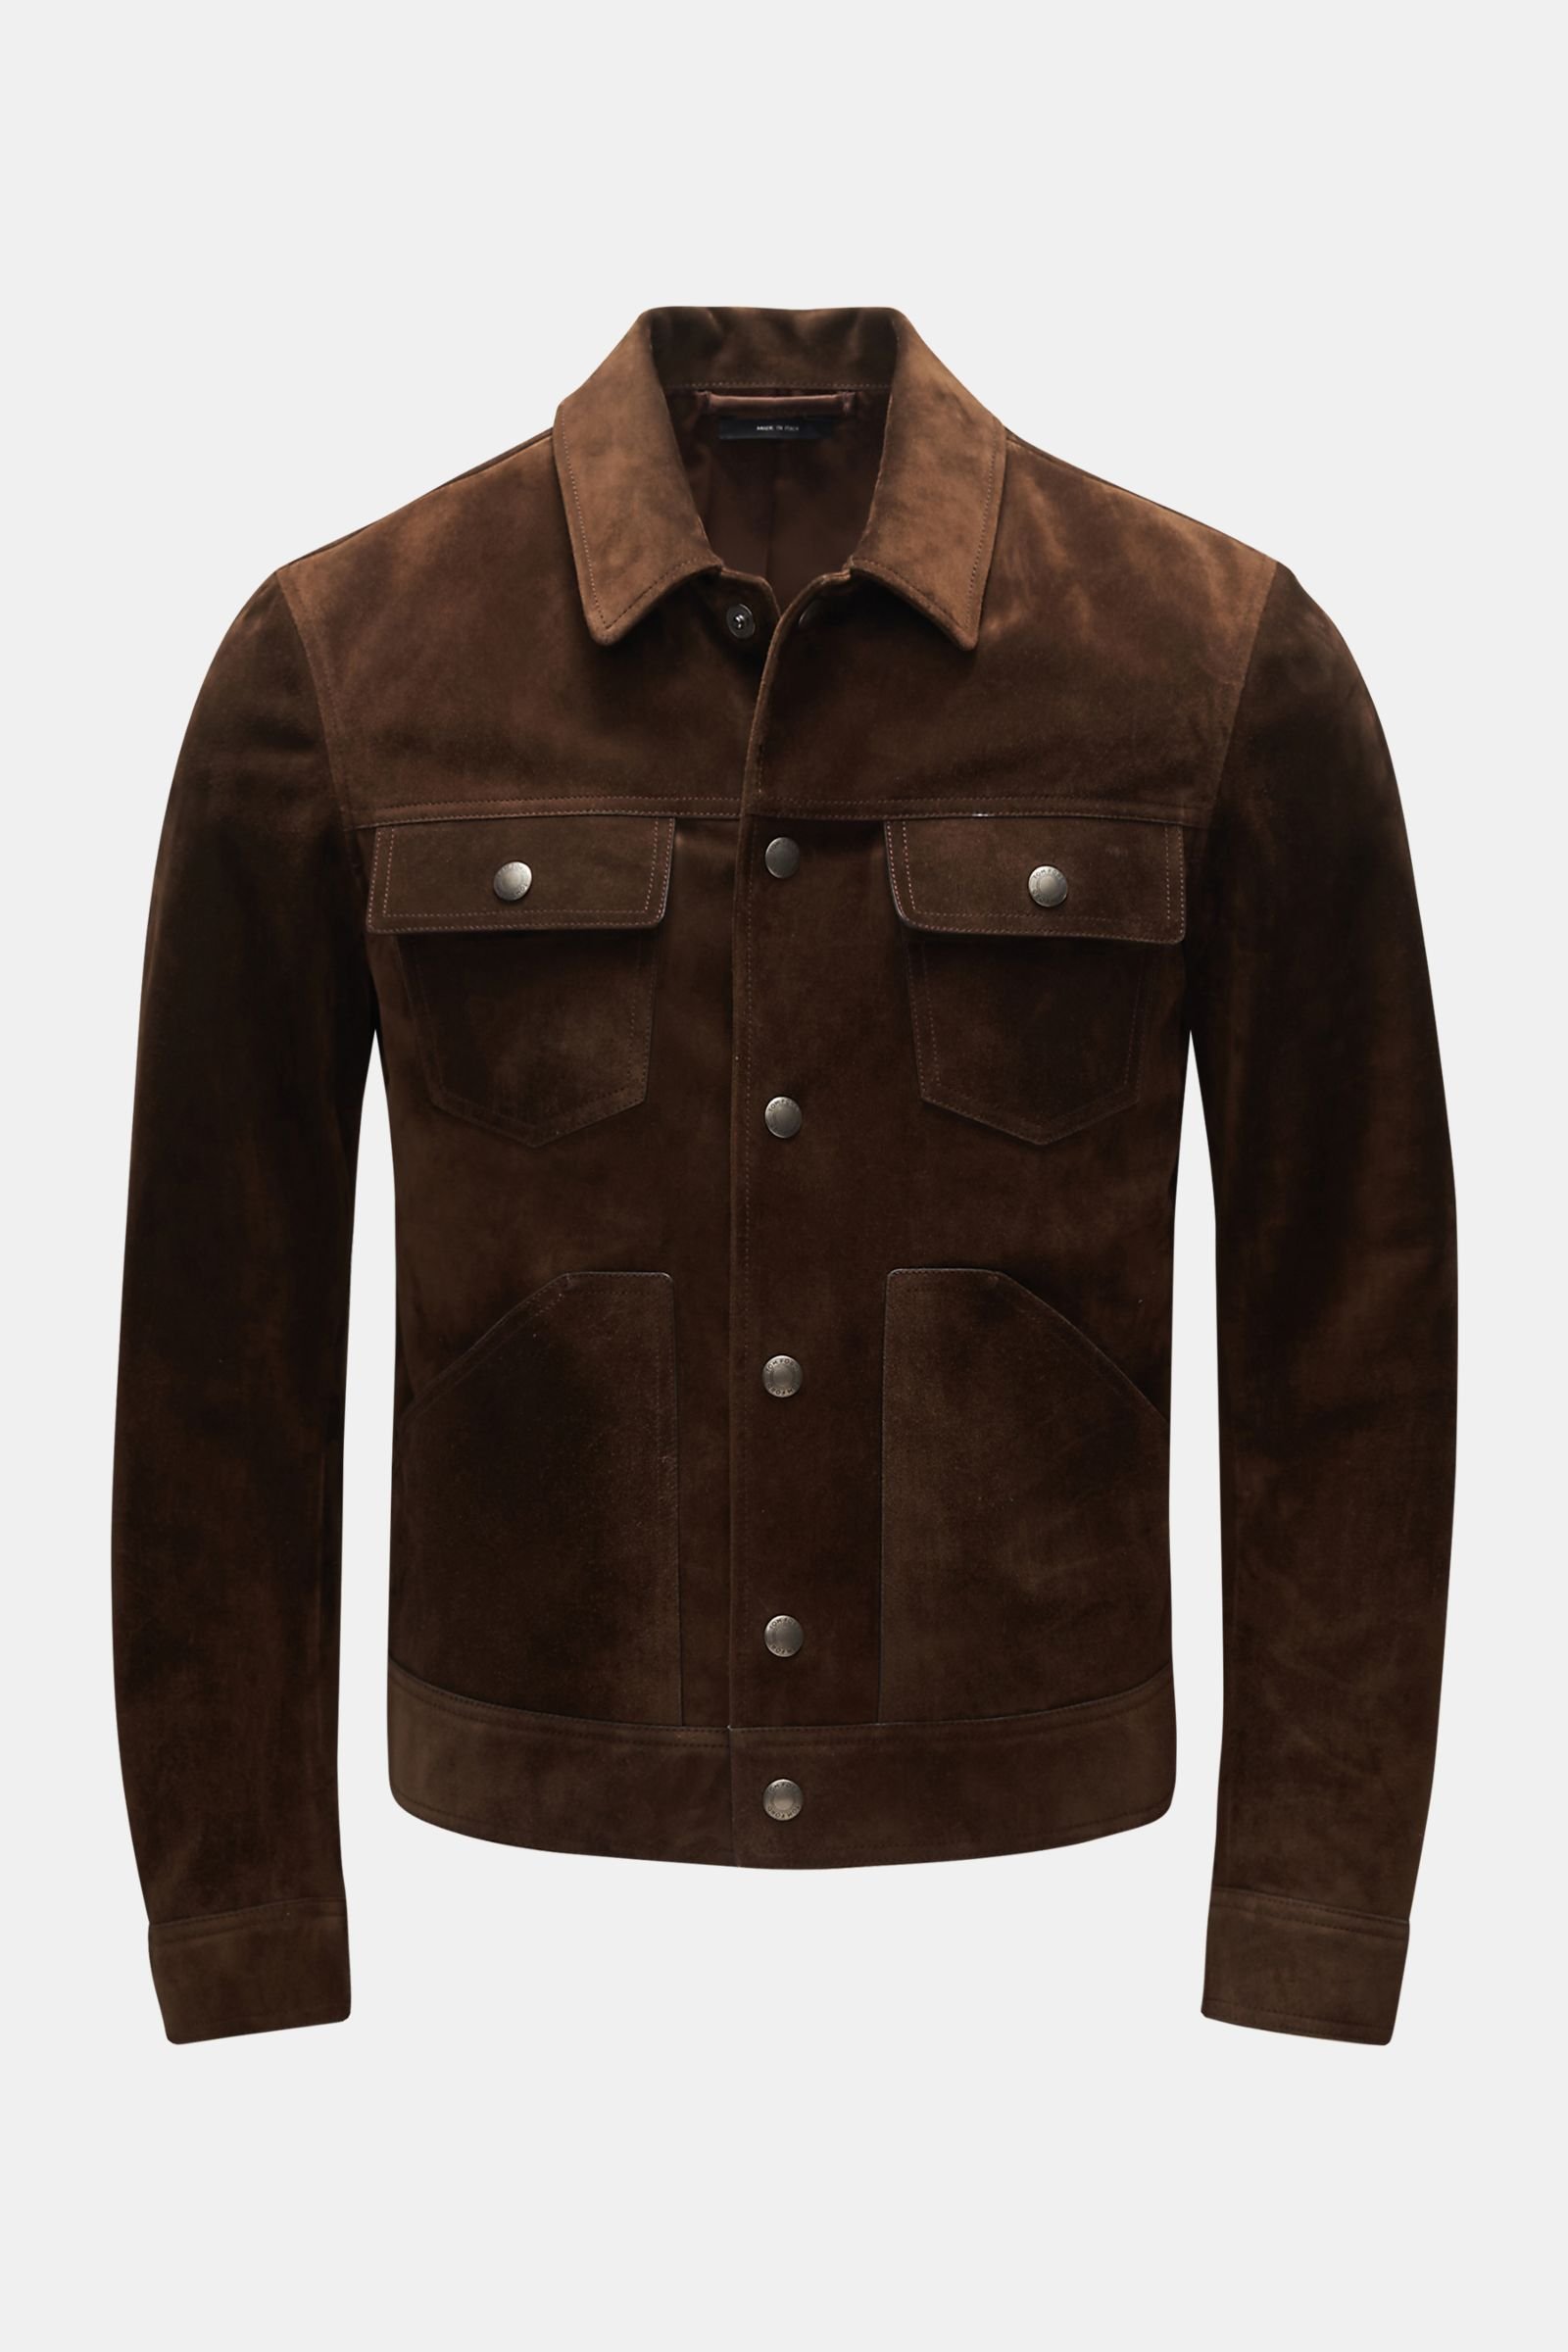 Introducir 70+ imagen brown suede jacket tom ford